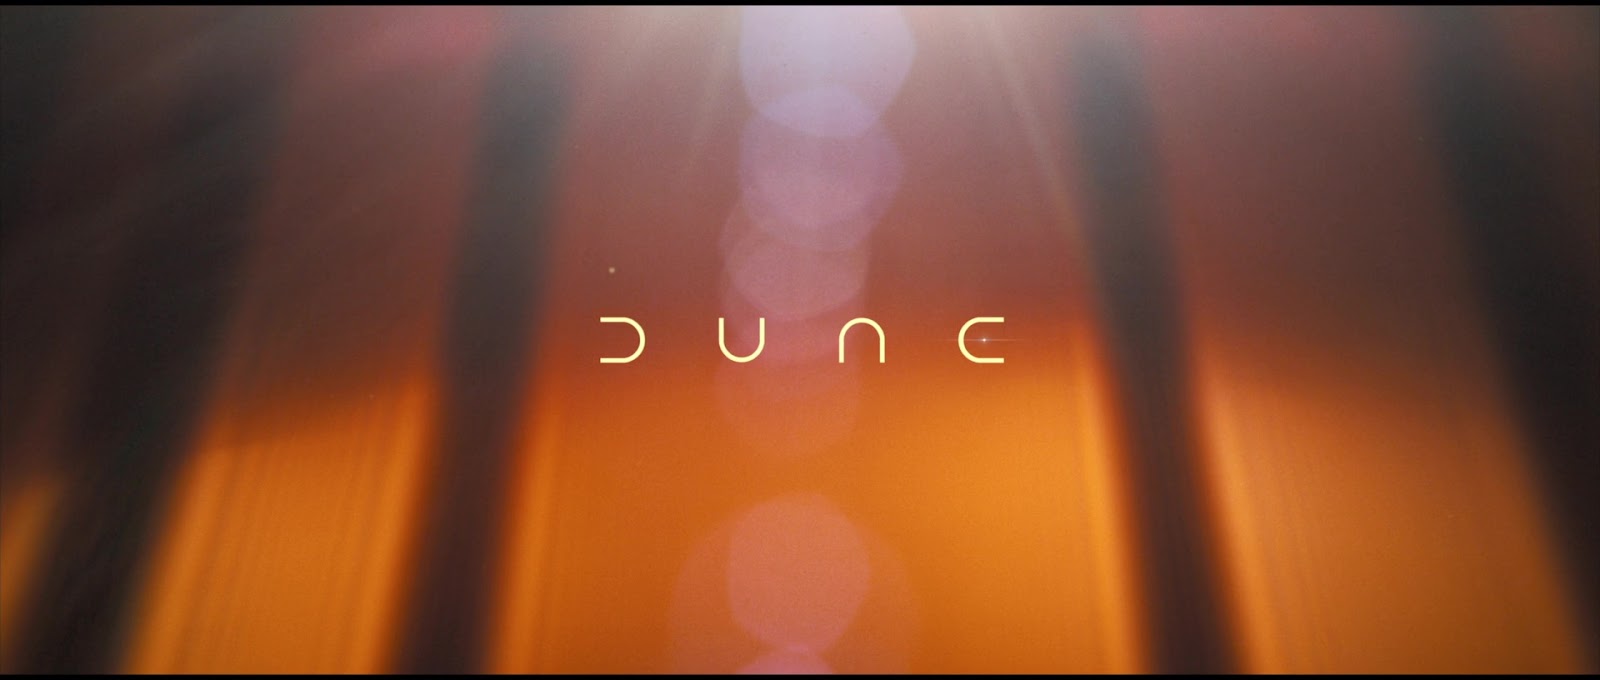 Duna (2021) 1080p WEB-DL Latino